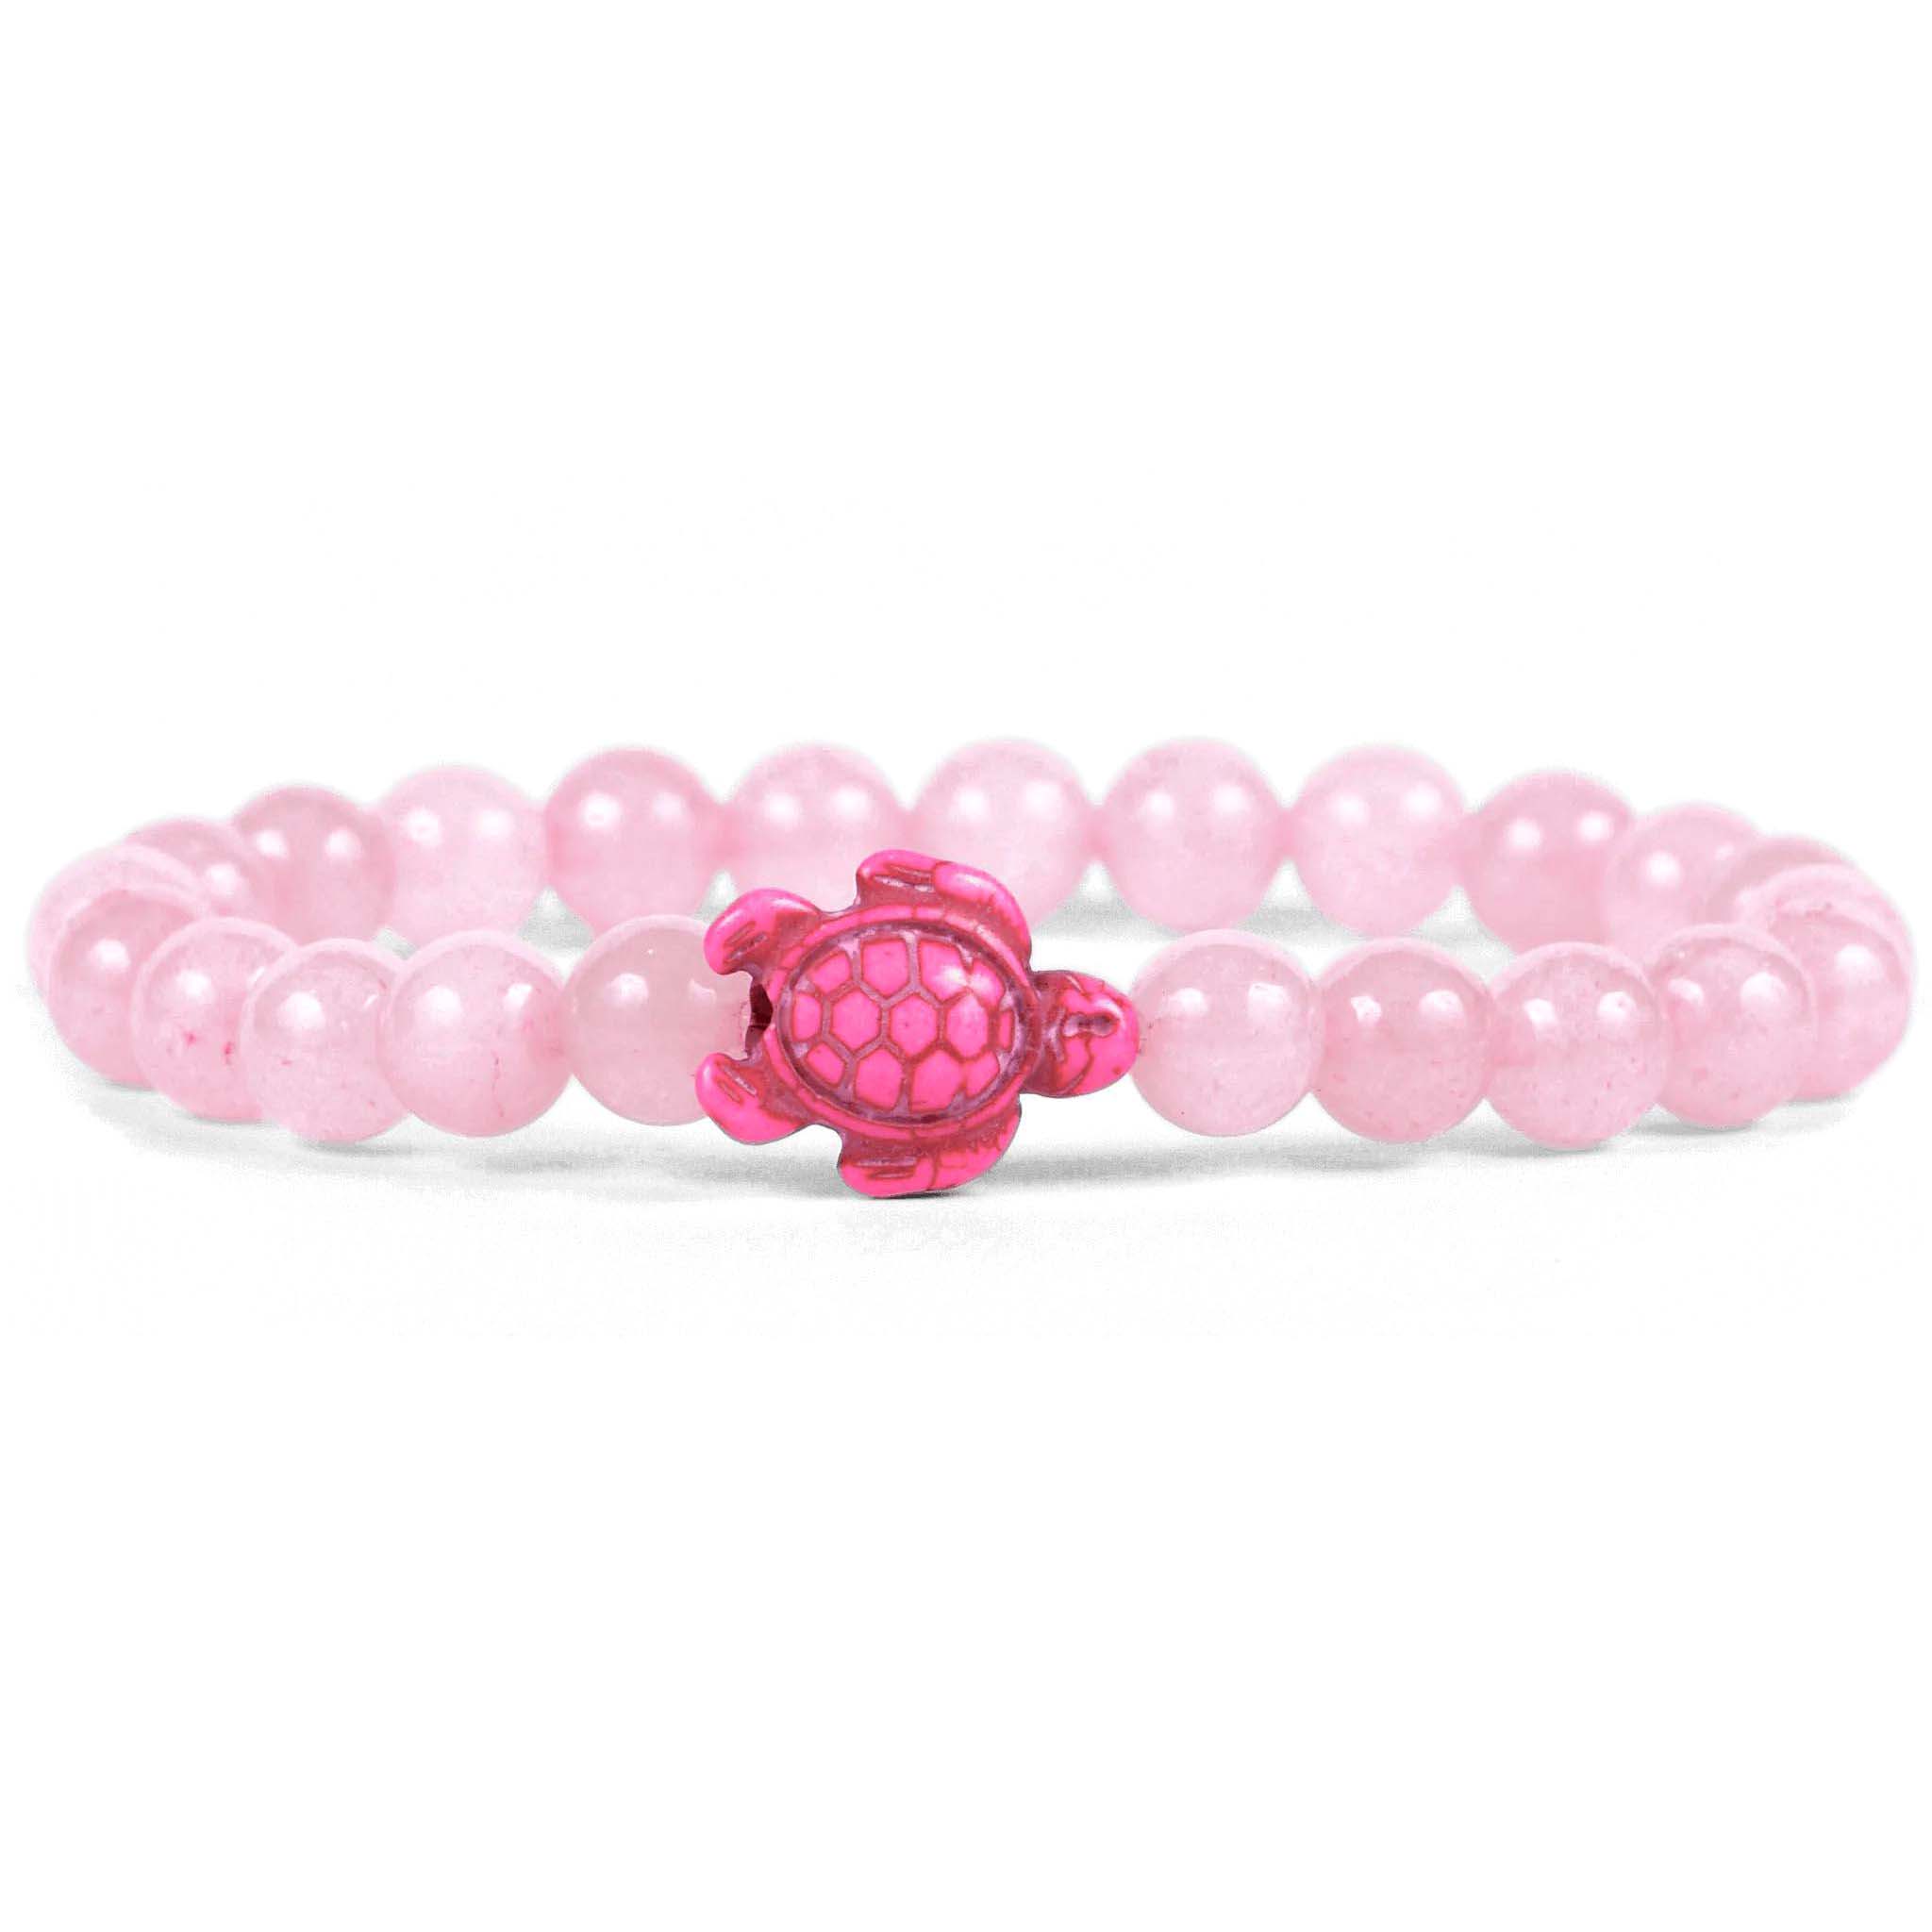 Prink quartz beads with pink turtle bracelet